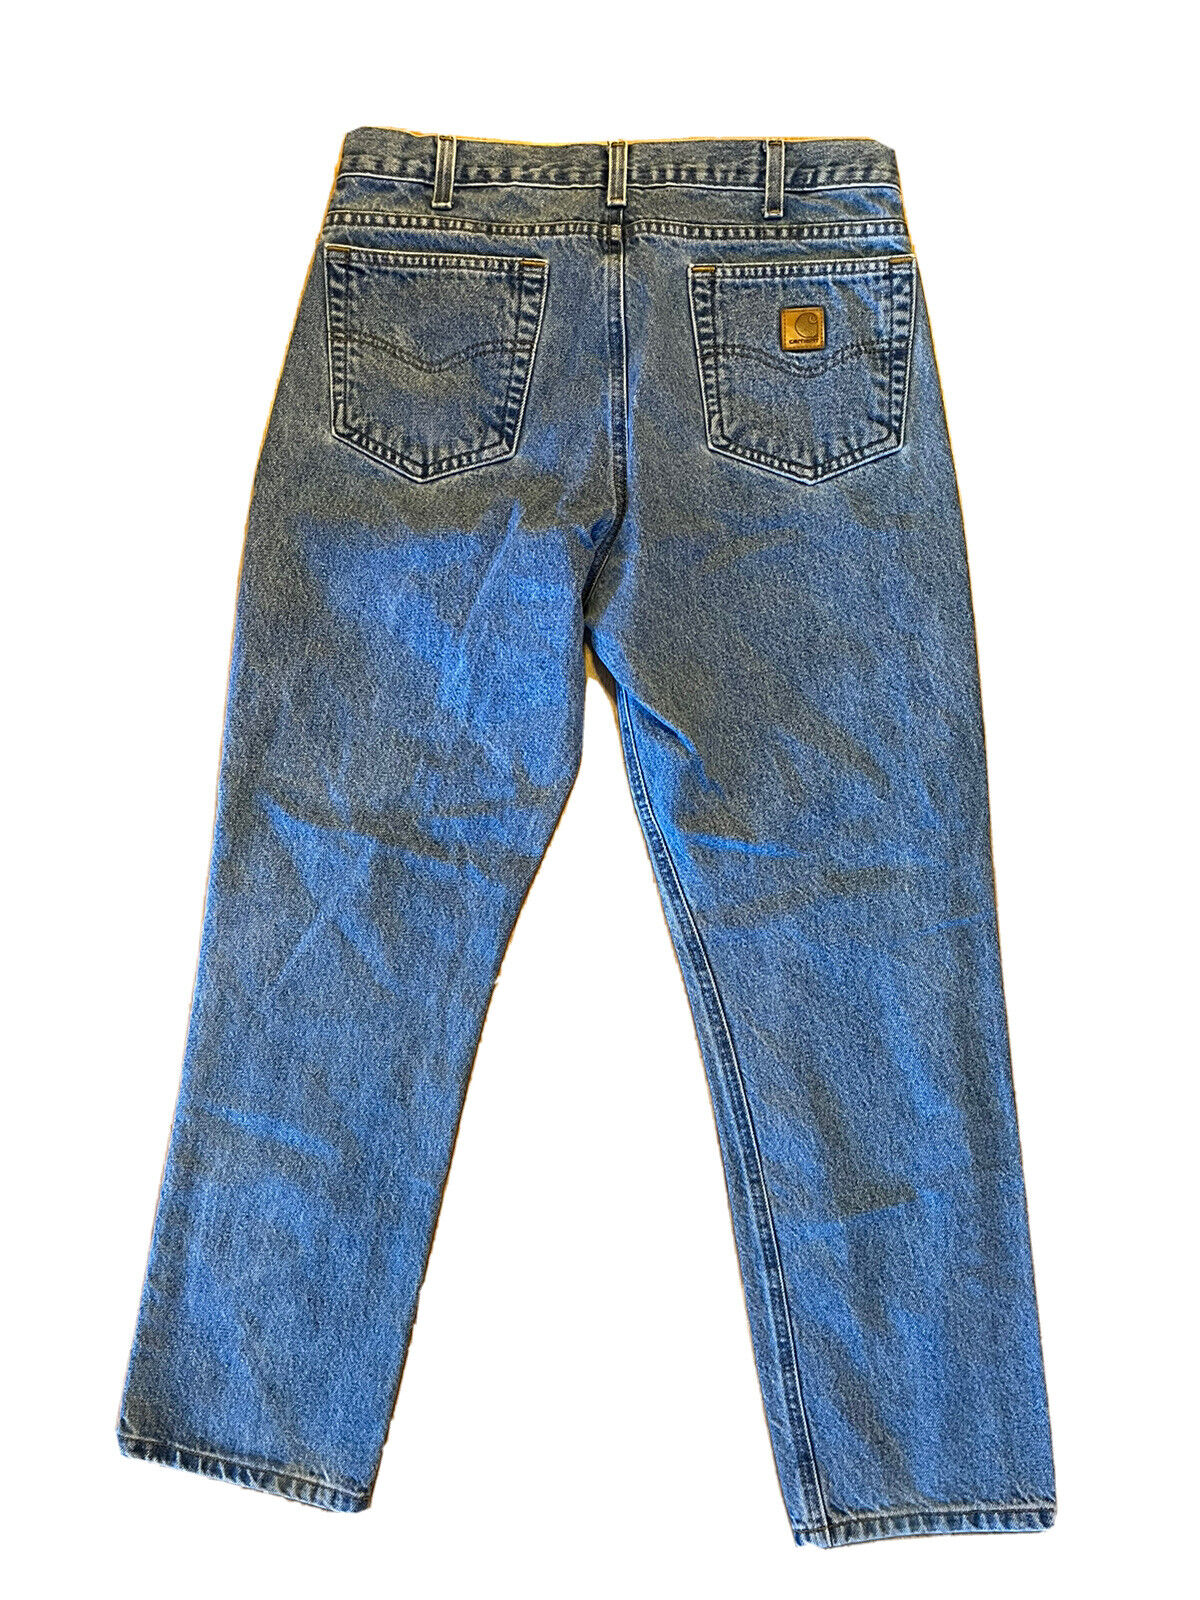 Vintage Carhartt Jeans 35x30 - image 5